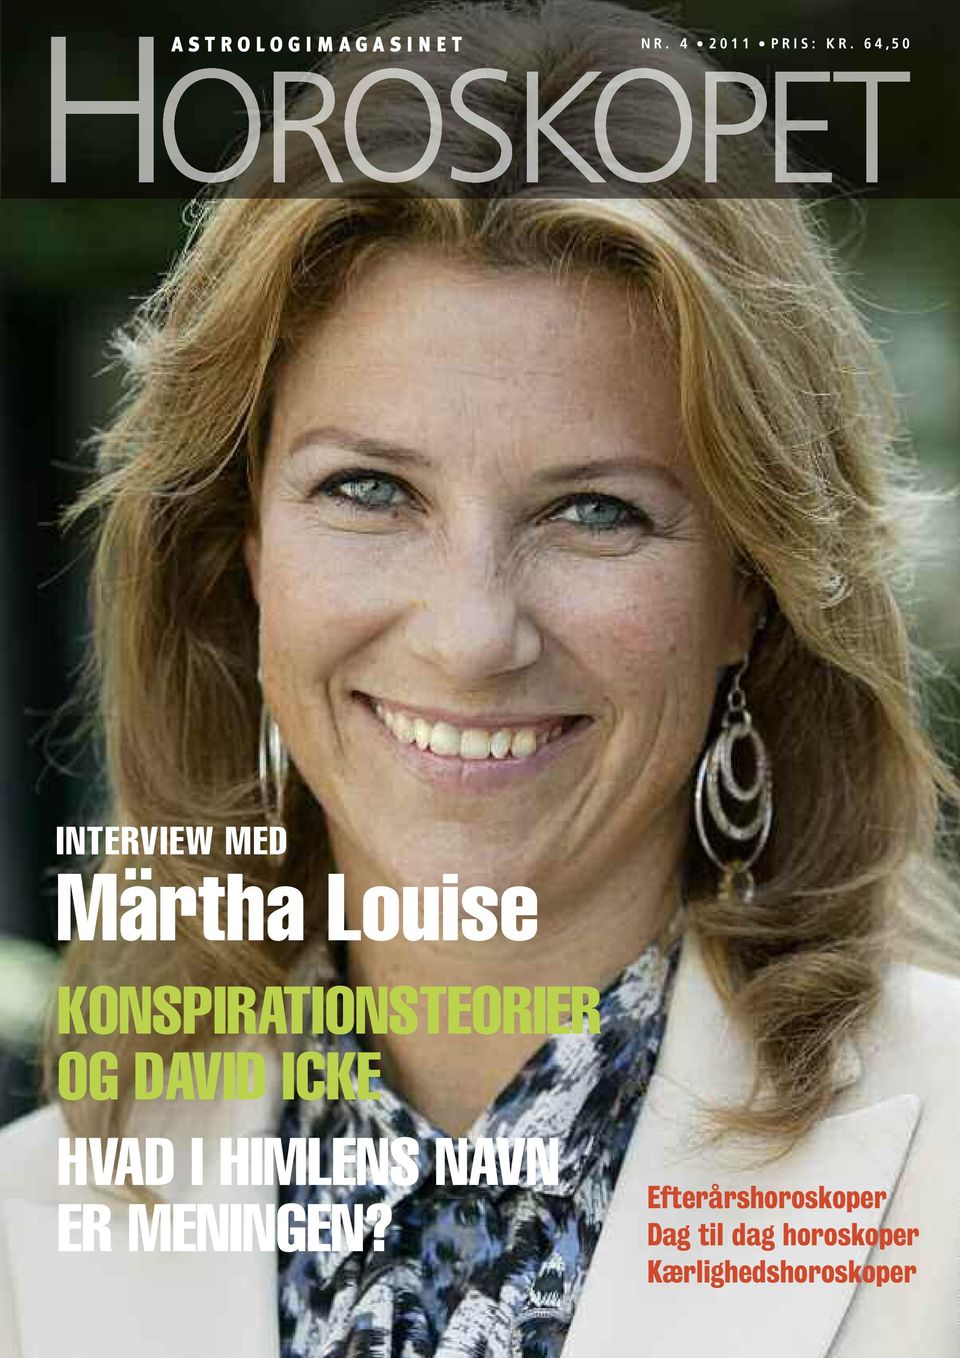 6 4, 5 0 INTERVIEW MED Märtha Louise KONSPIRATIONSTEORIER